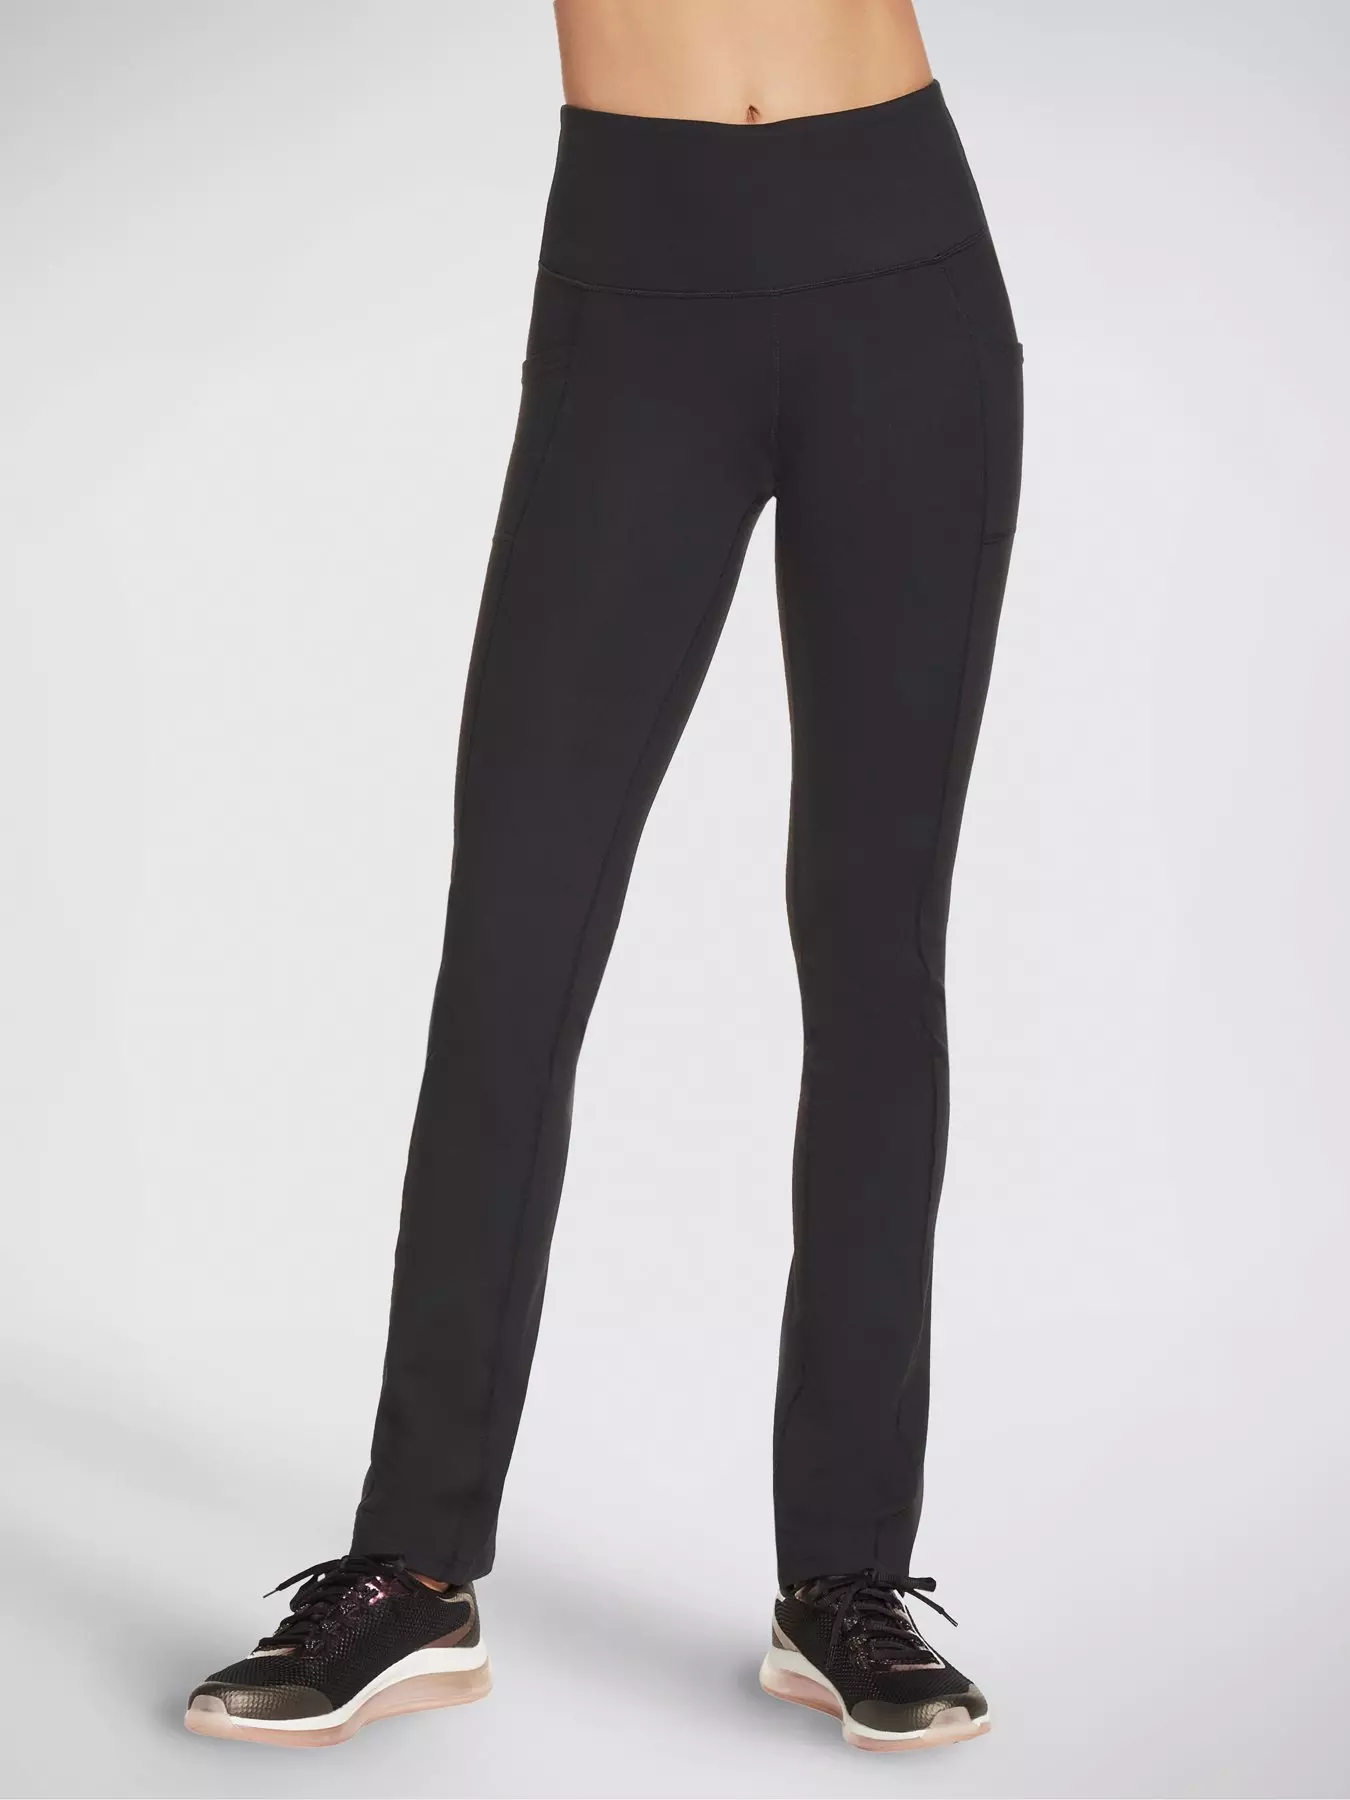 Skechers GO WALK Wear Pant Flare Black Legging Yoga Pant Women Large EUC  Y2K